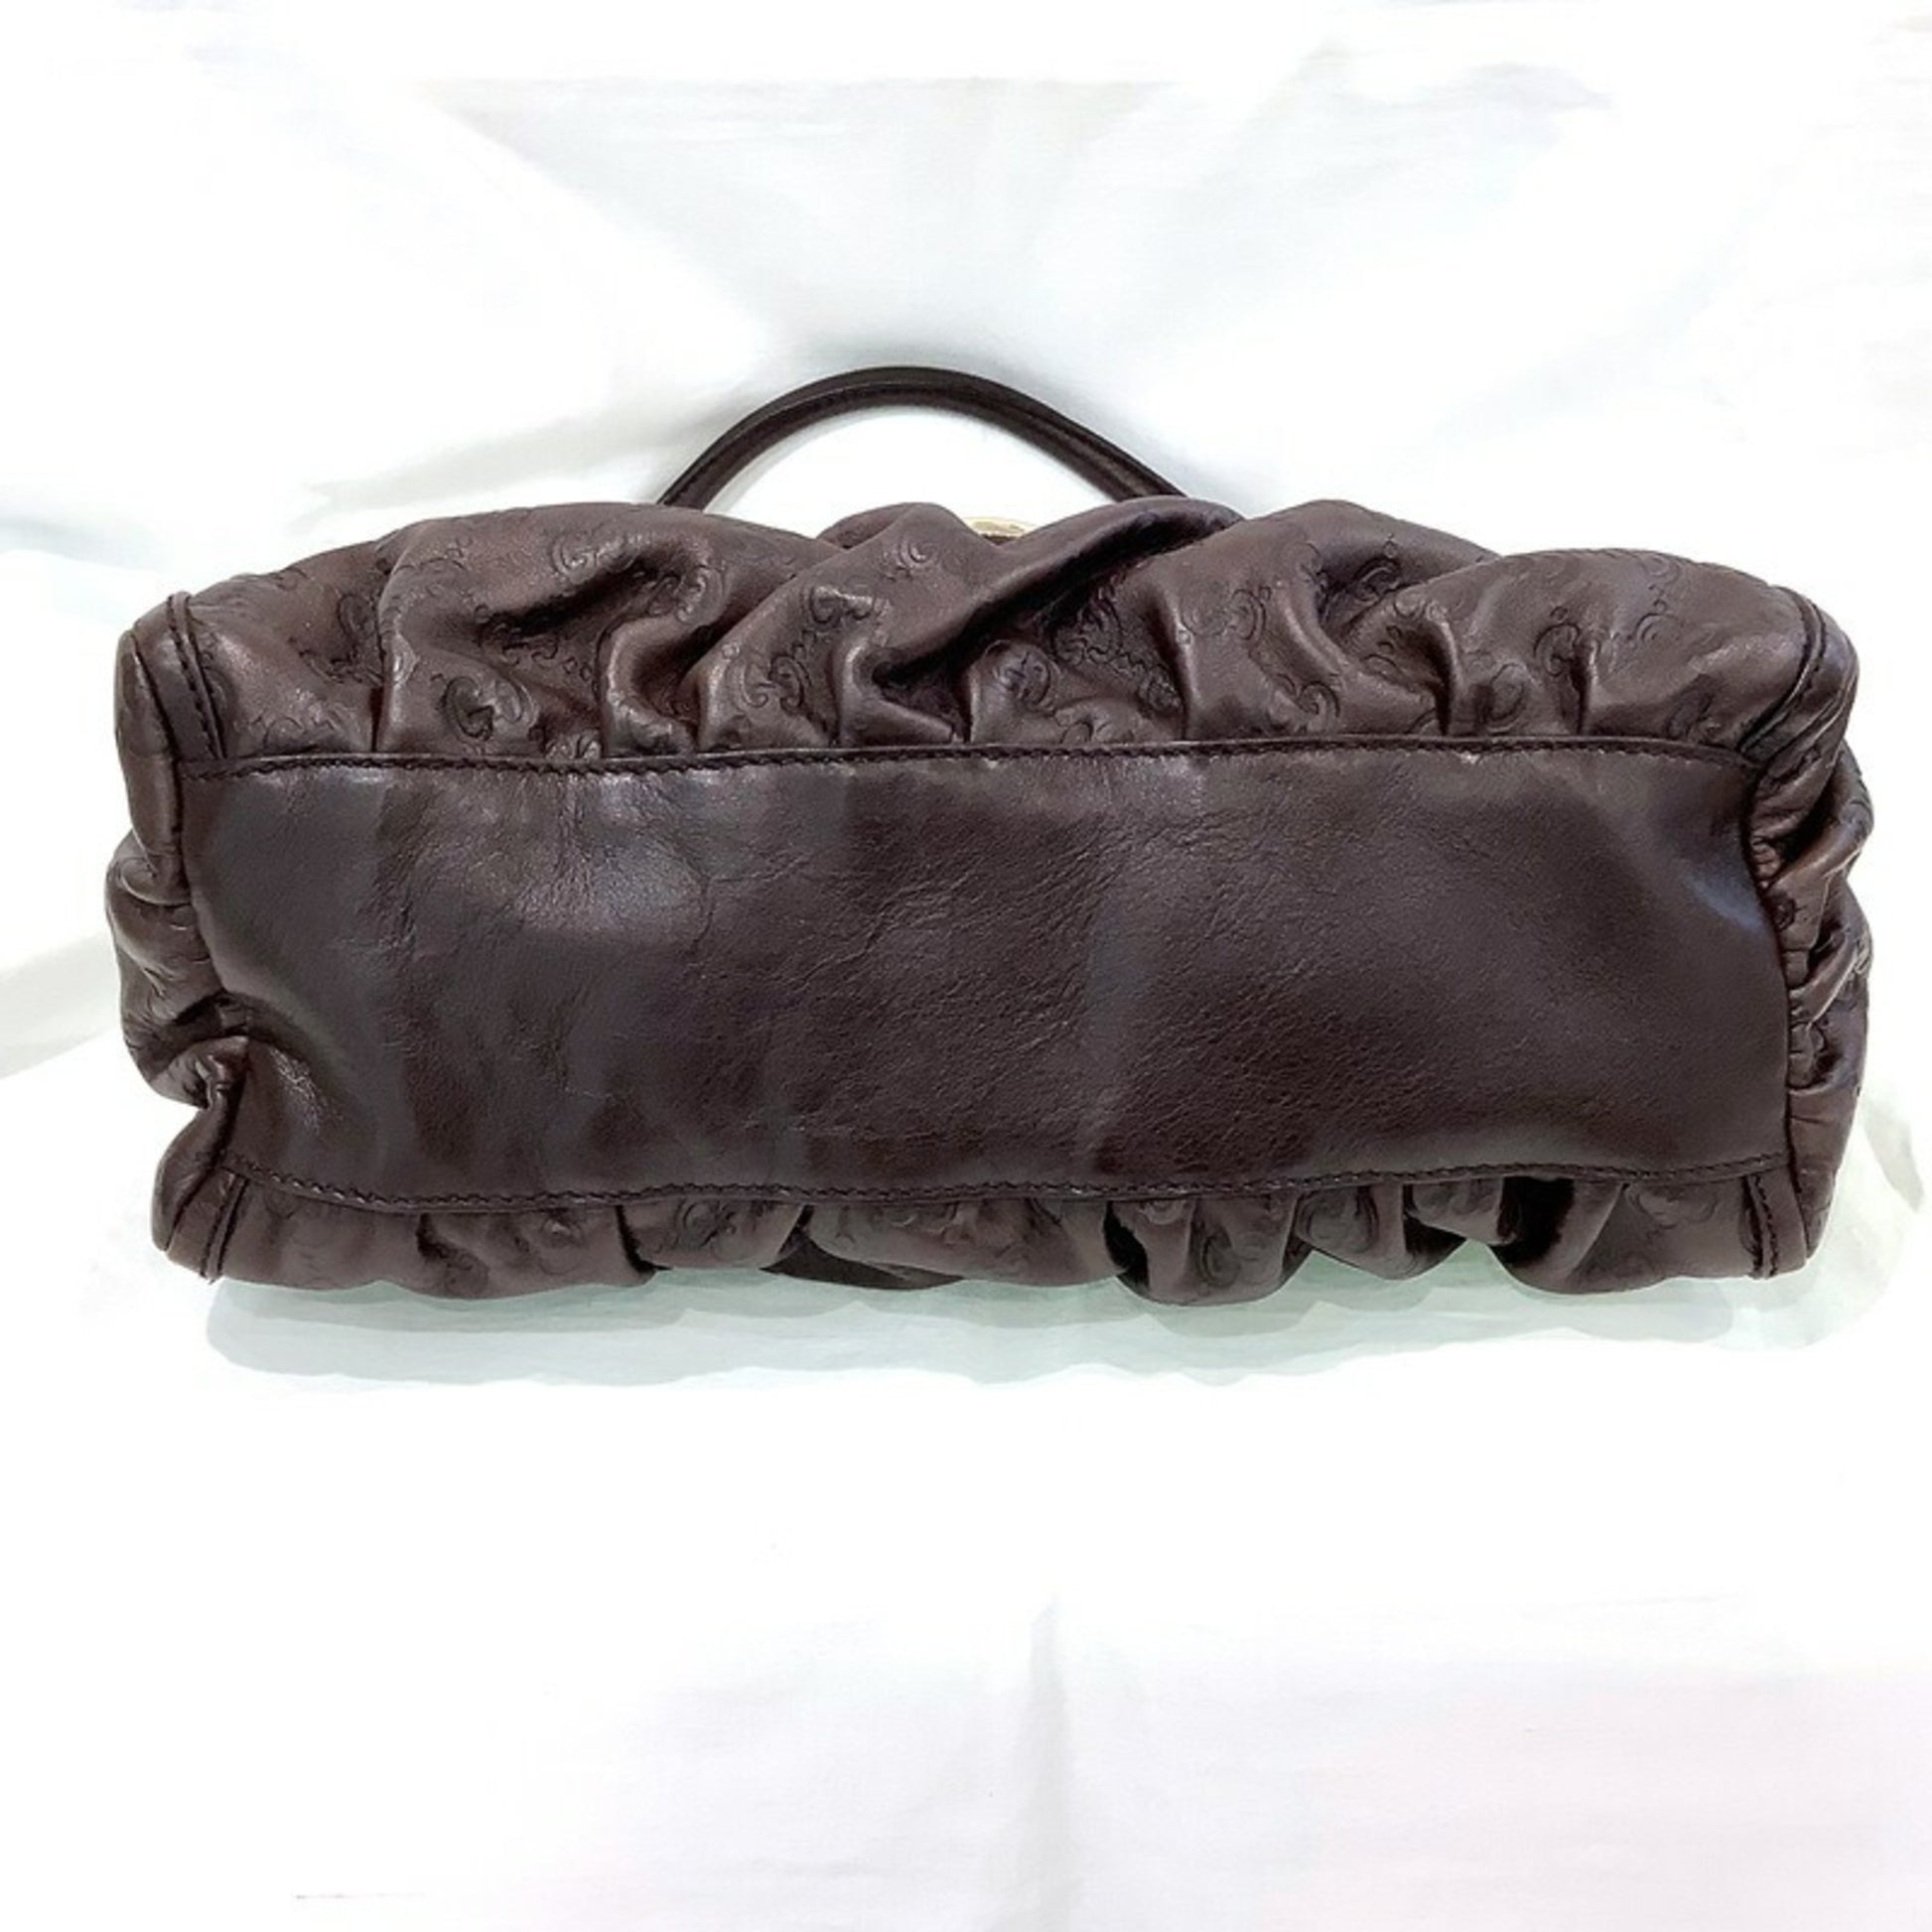 Gucci GUCCI Abbey sima shoulder bag 190525 leather brown